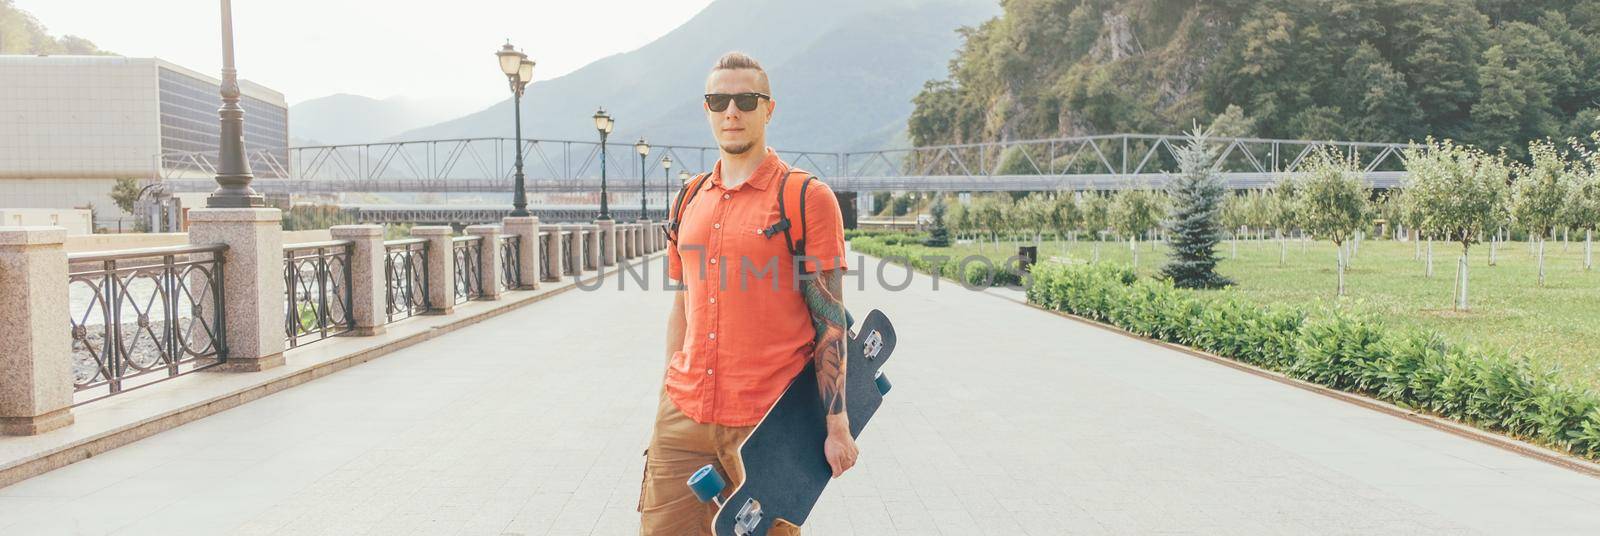 Young man walking with longboard outdoor. by alexAleksei